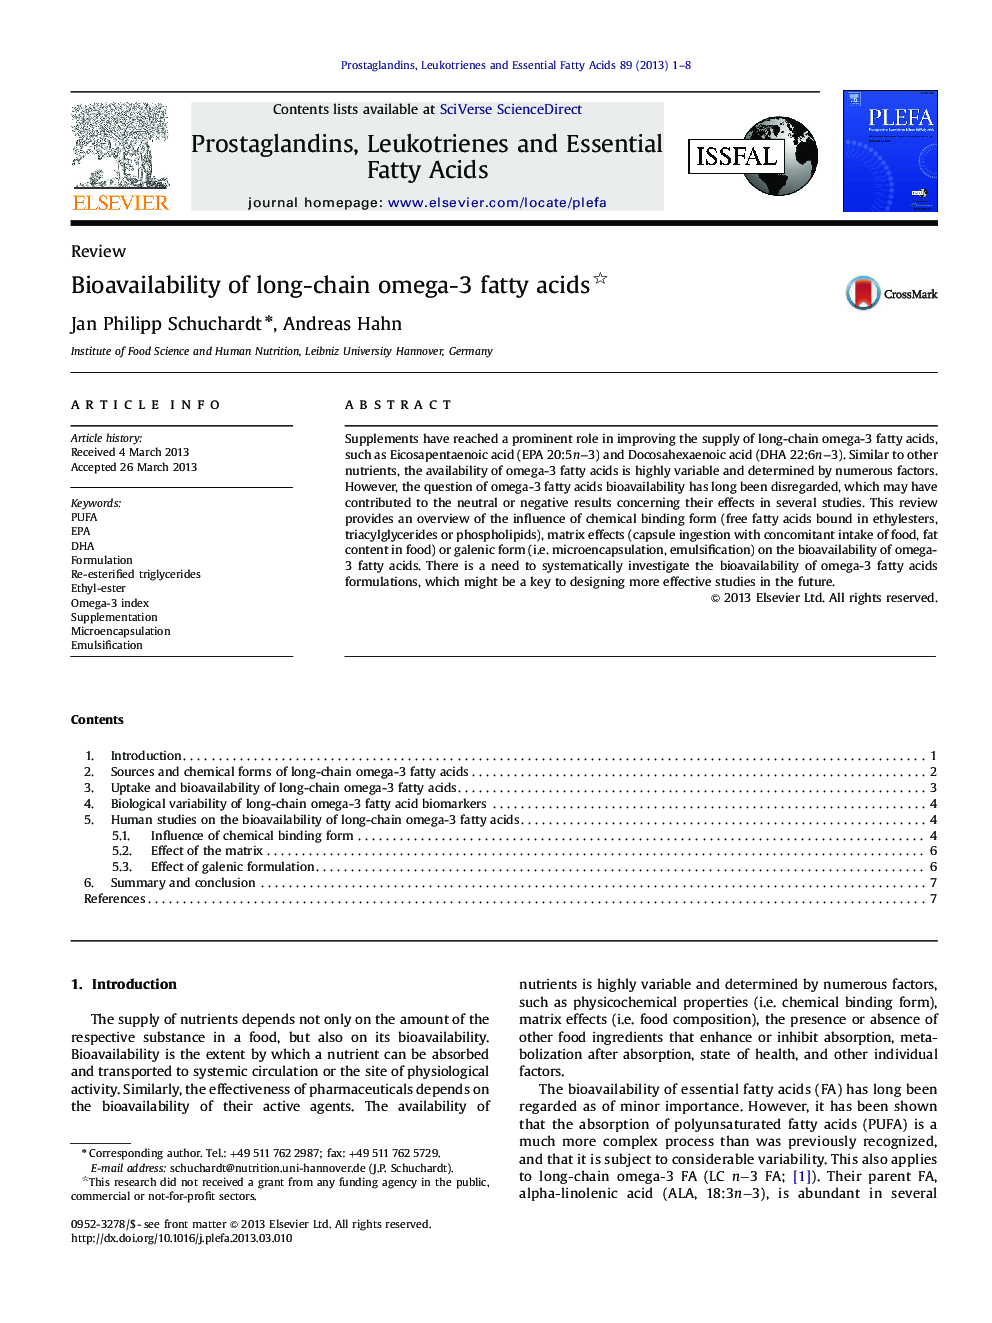 Bioavailability of long-chain omega-3 fatty acids 